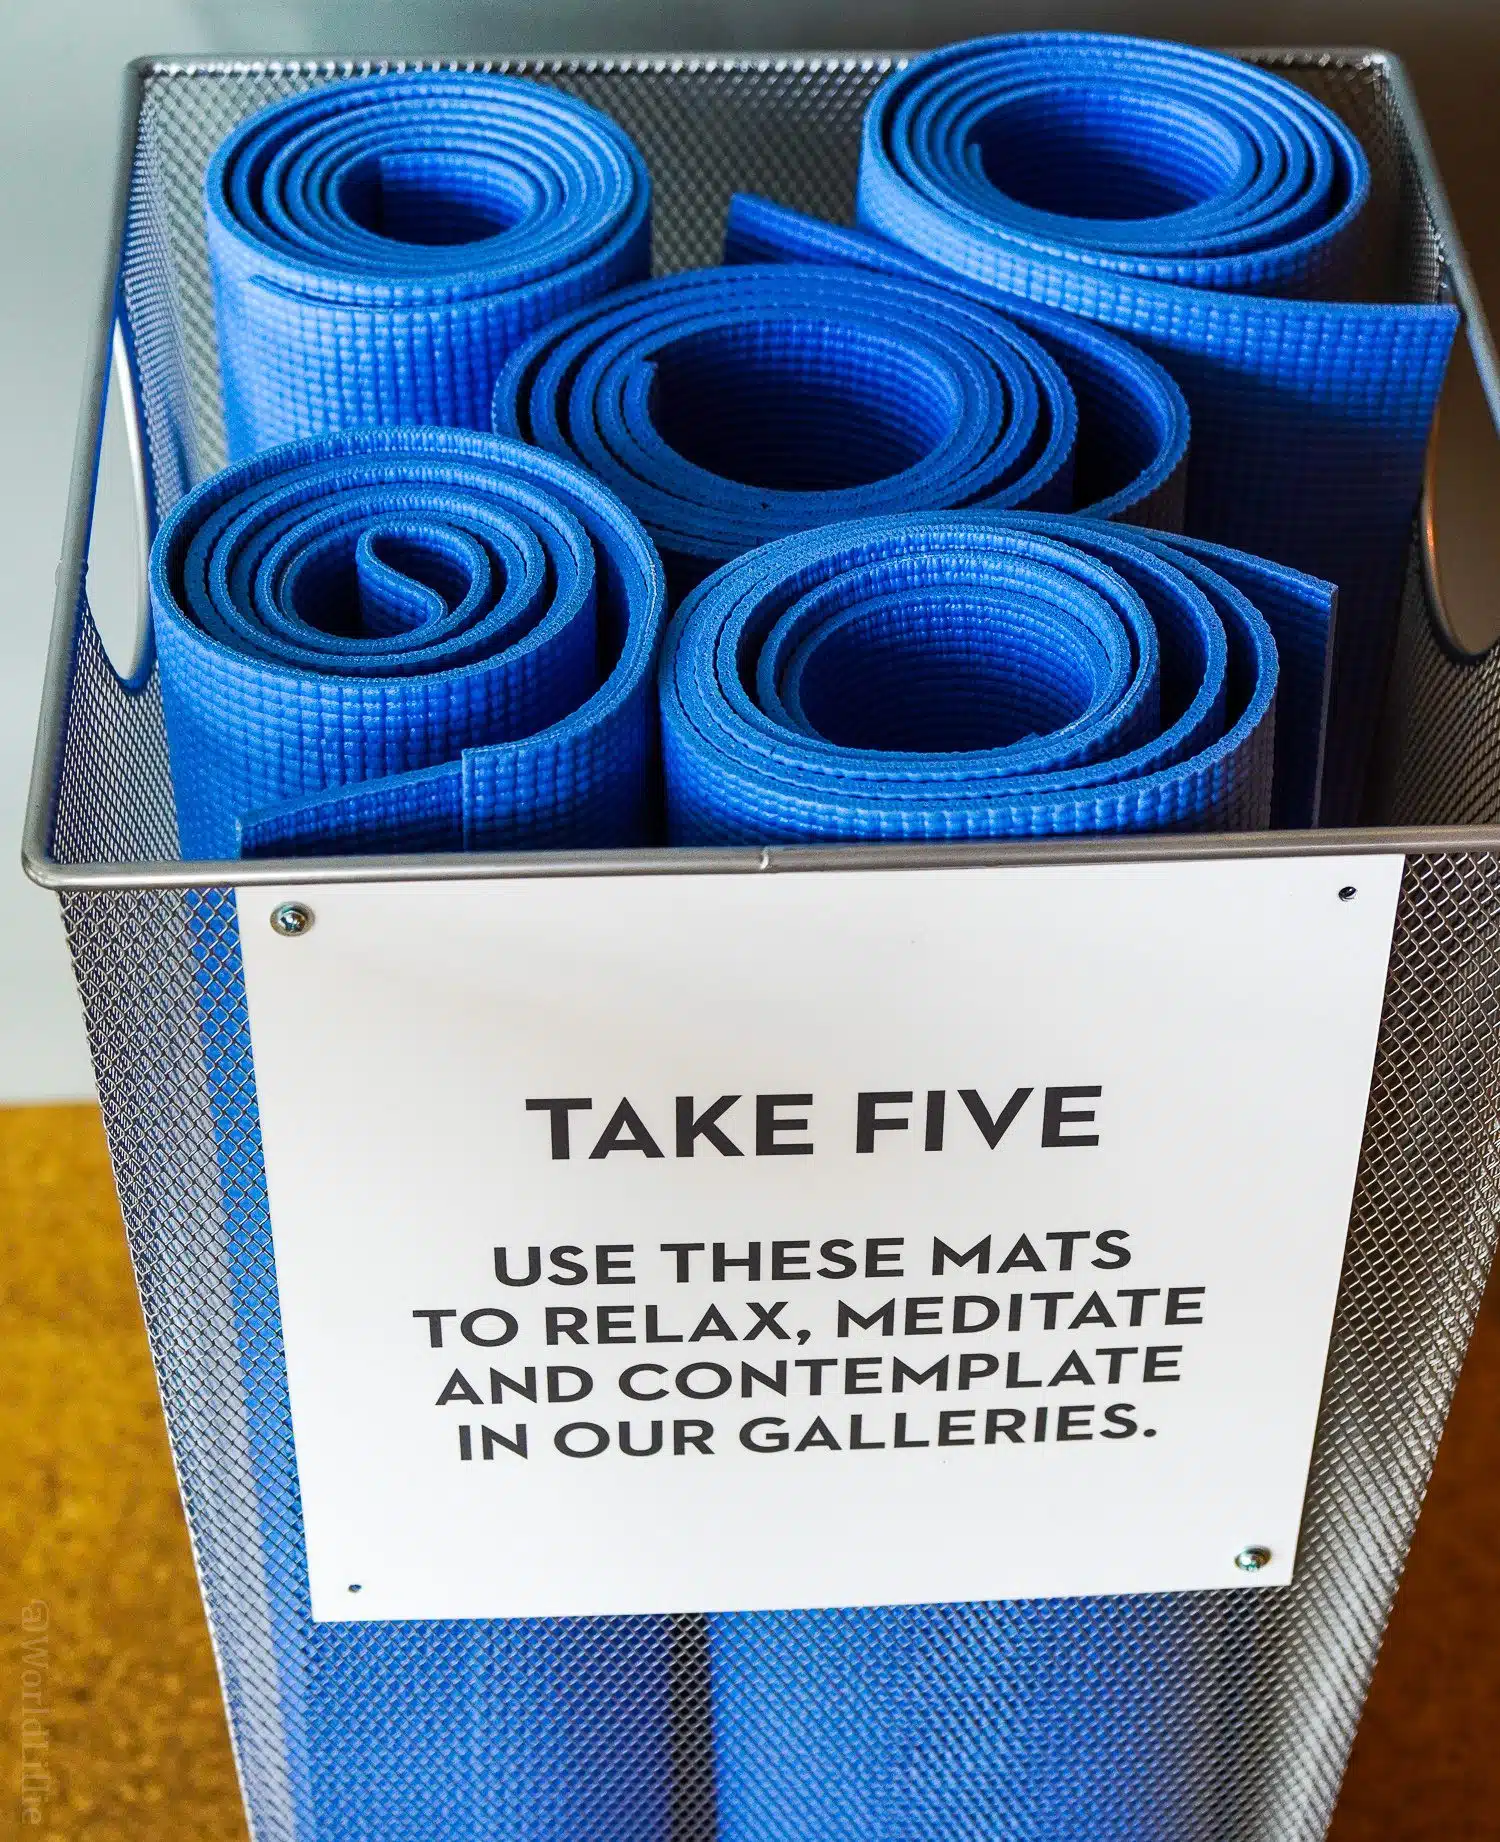 Yoga mats to relax in an art museum